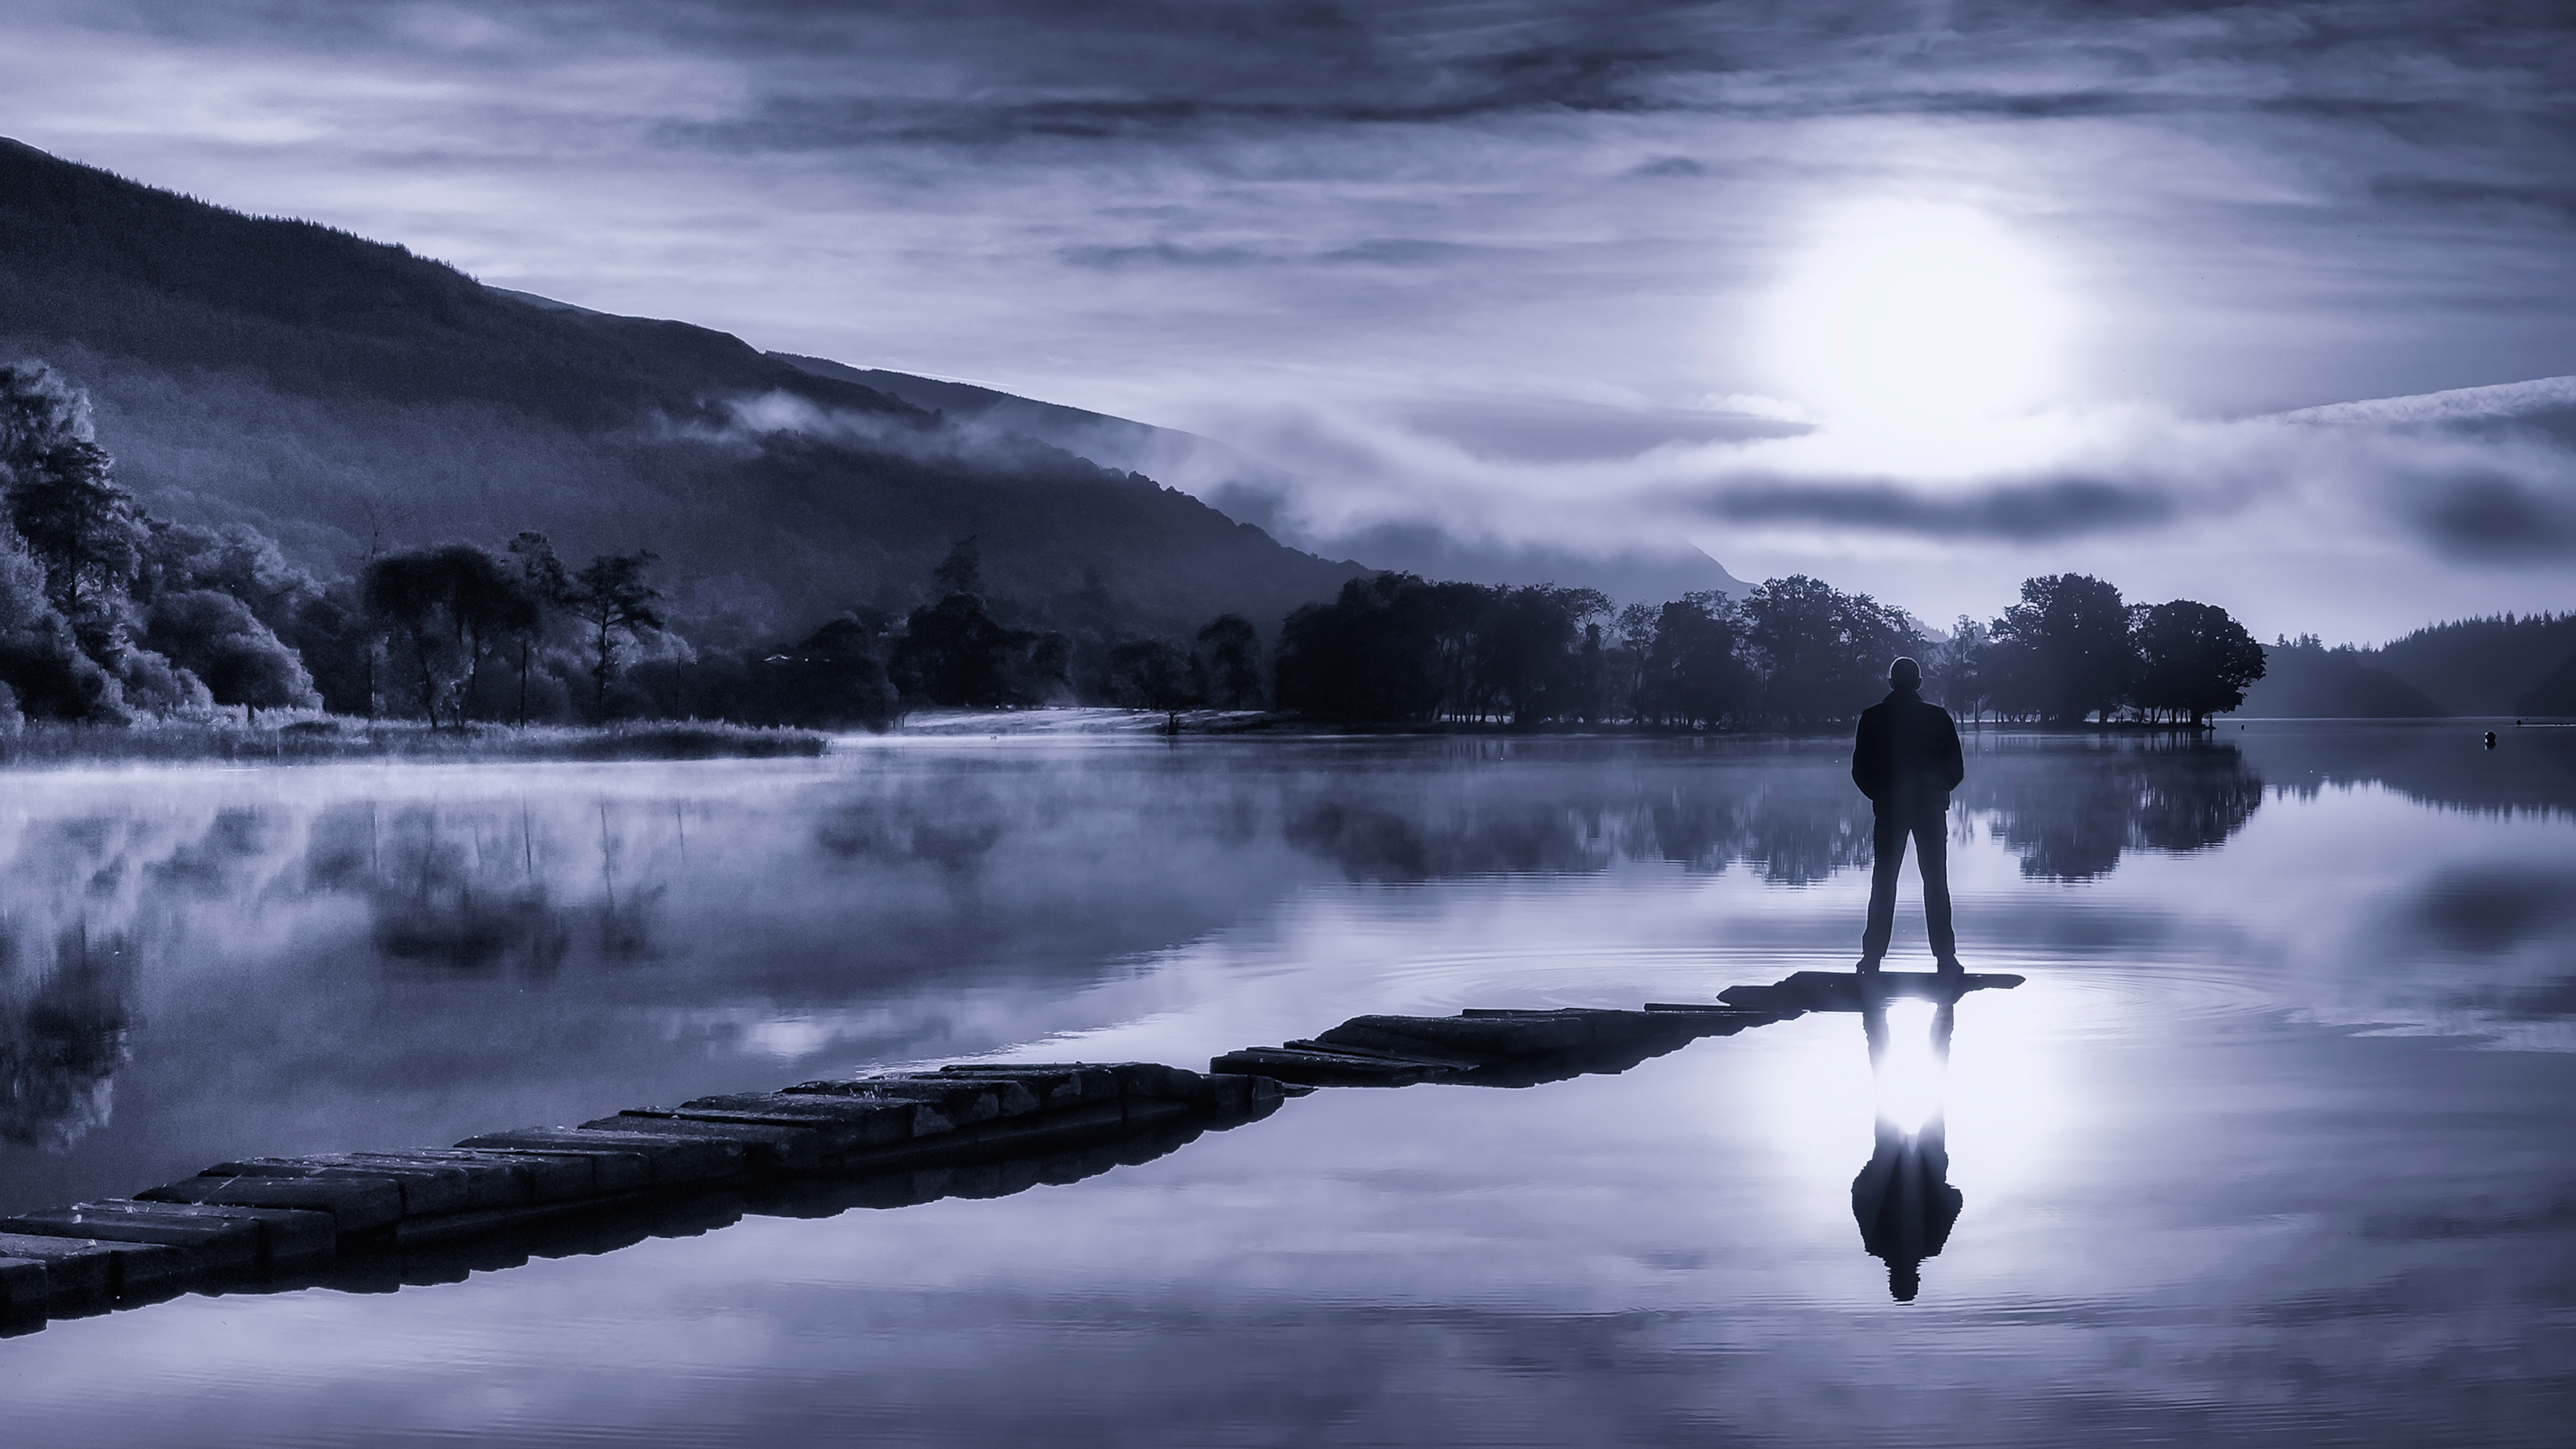 Alone at Lake by John McSporran